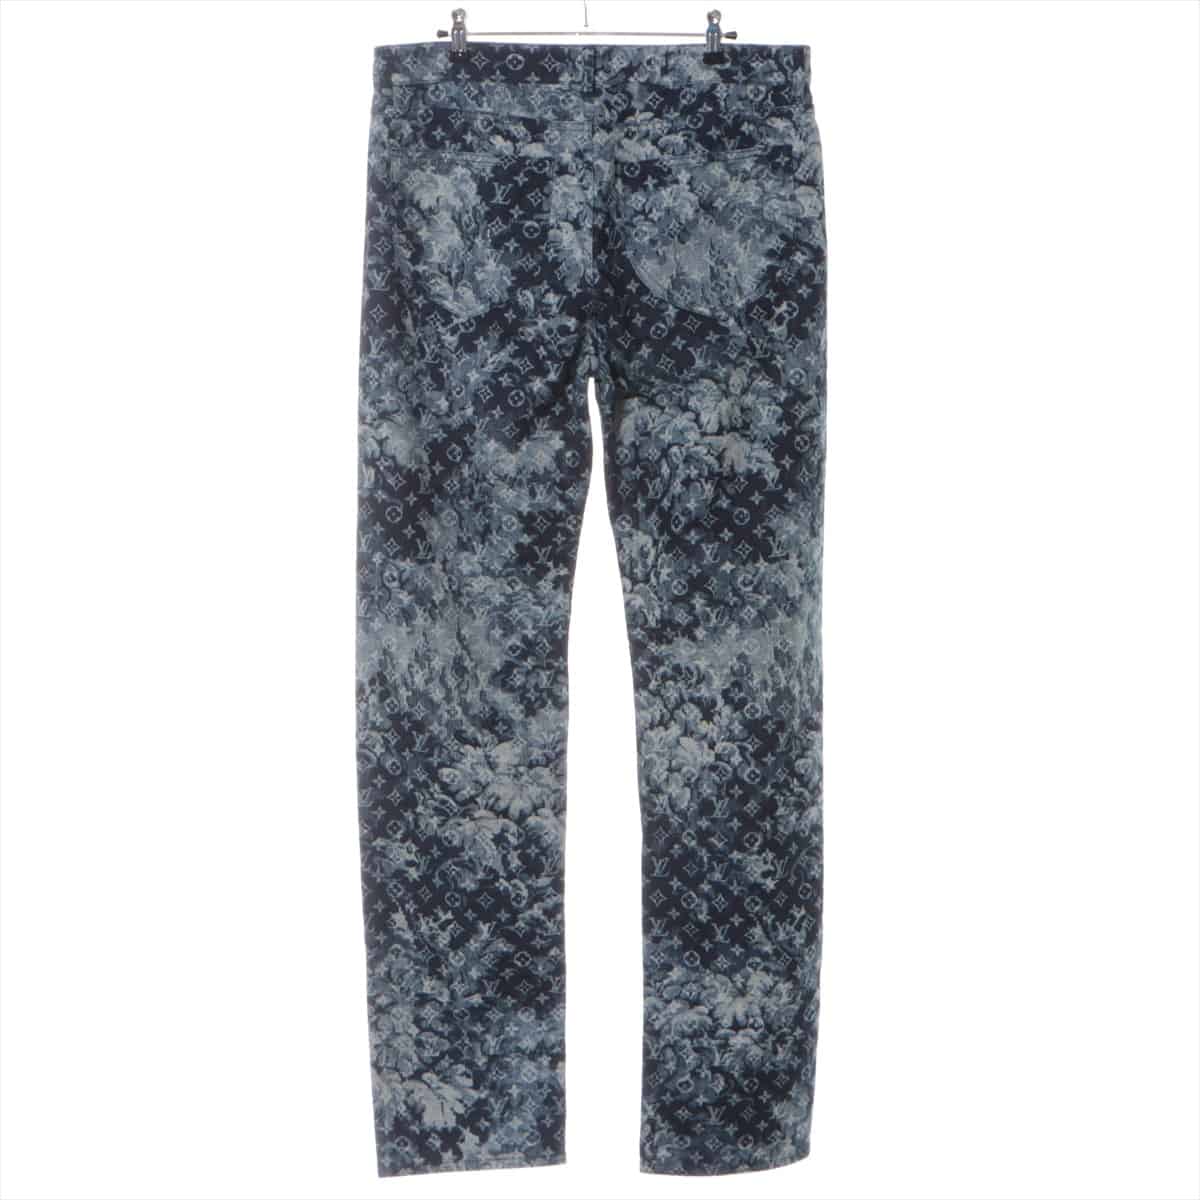 Louis Vuitton Monogram 21 years Cotton & polyurethane Denim pants 32 Men's Navy blue  RM211M